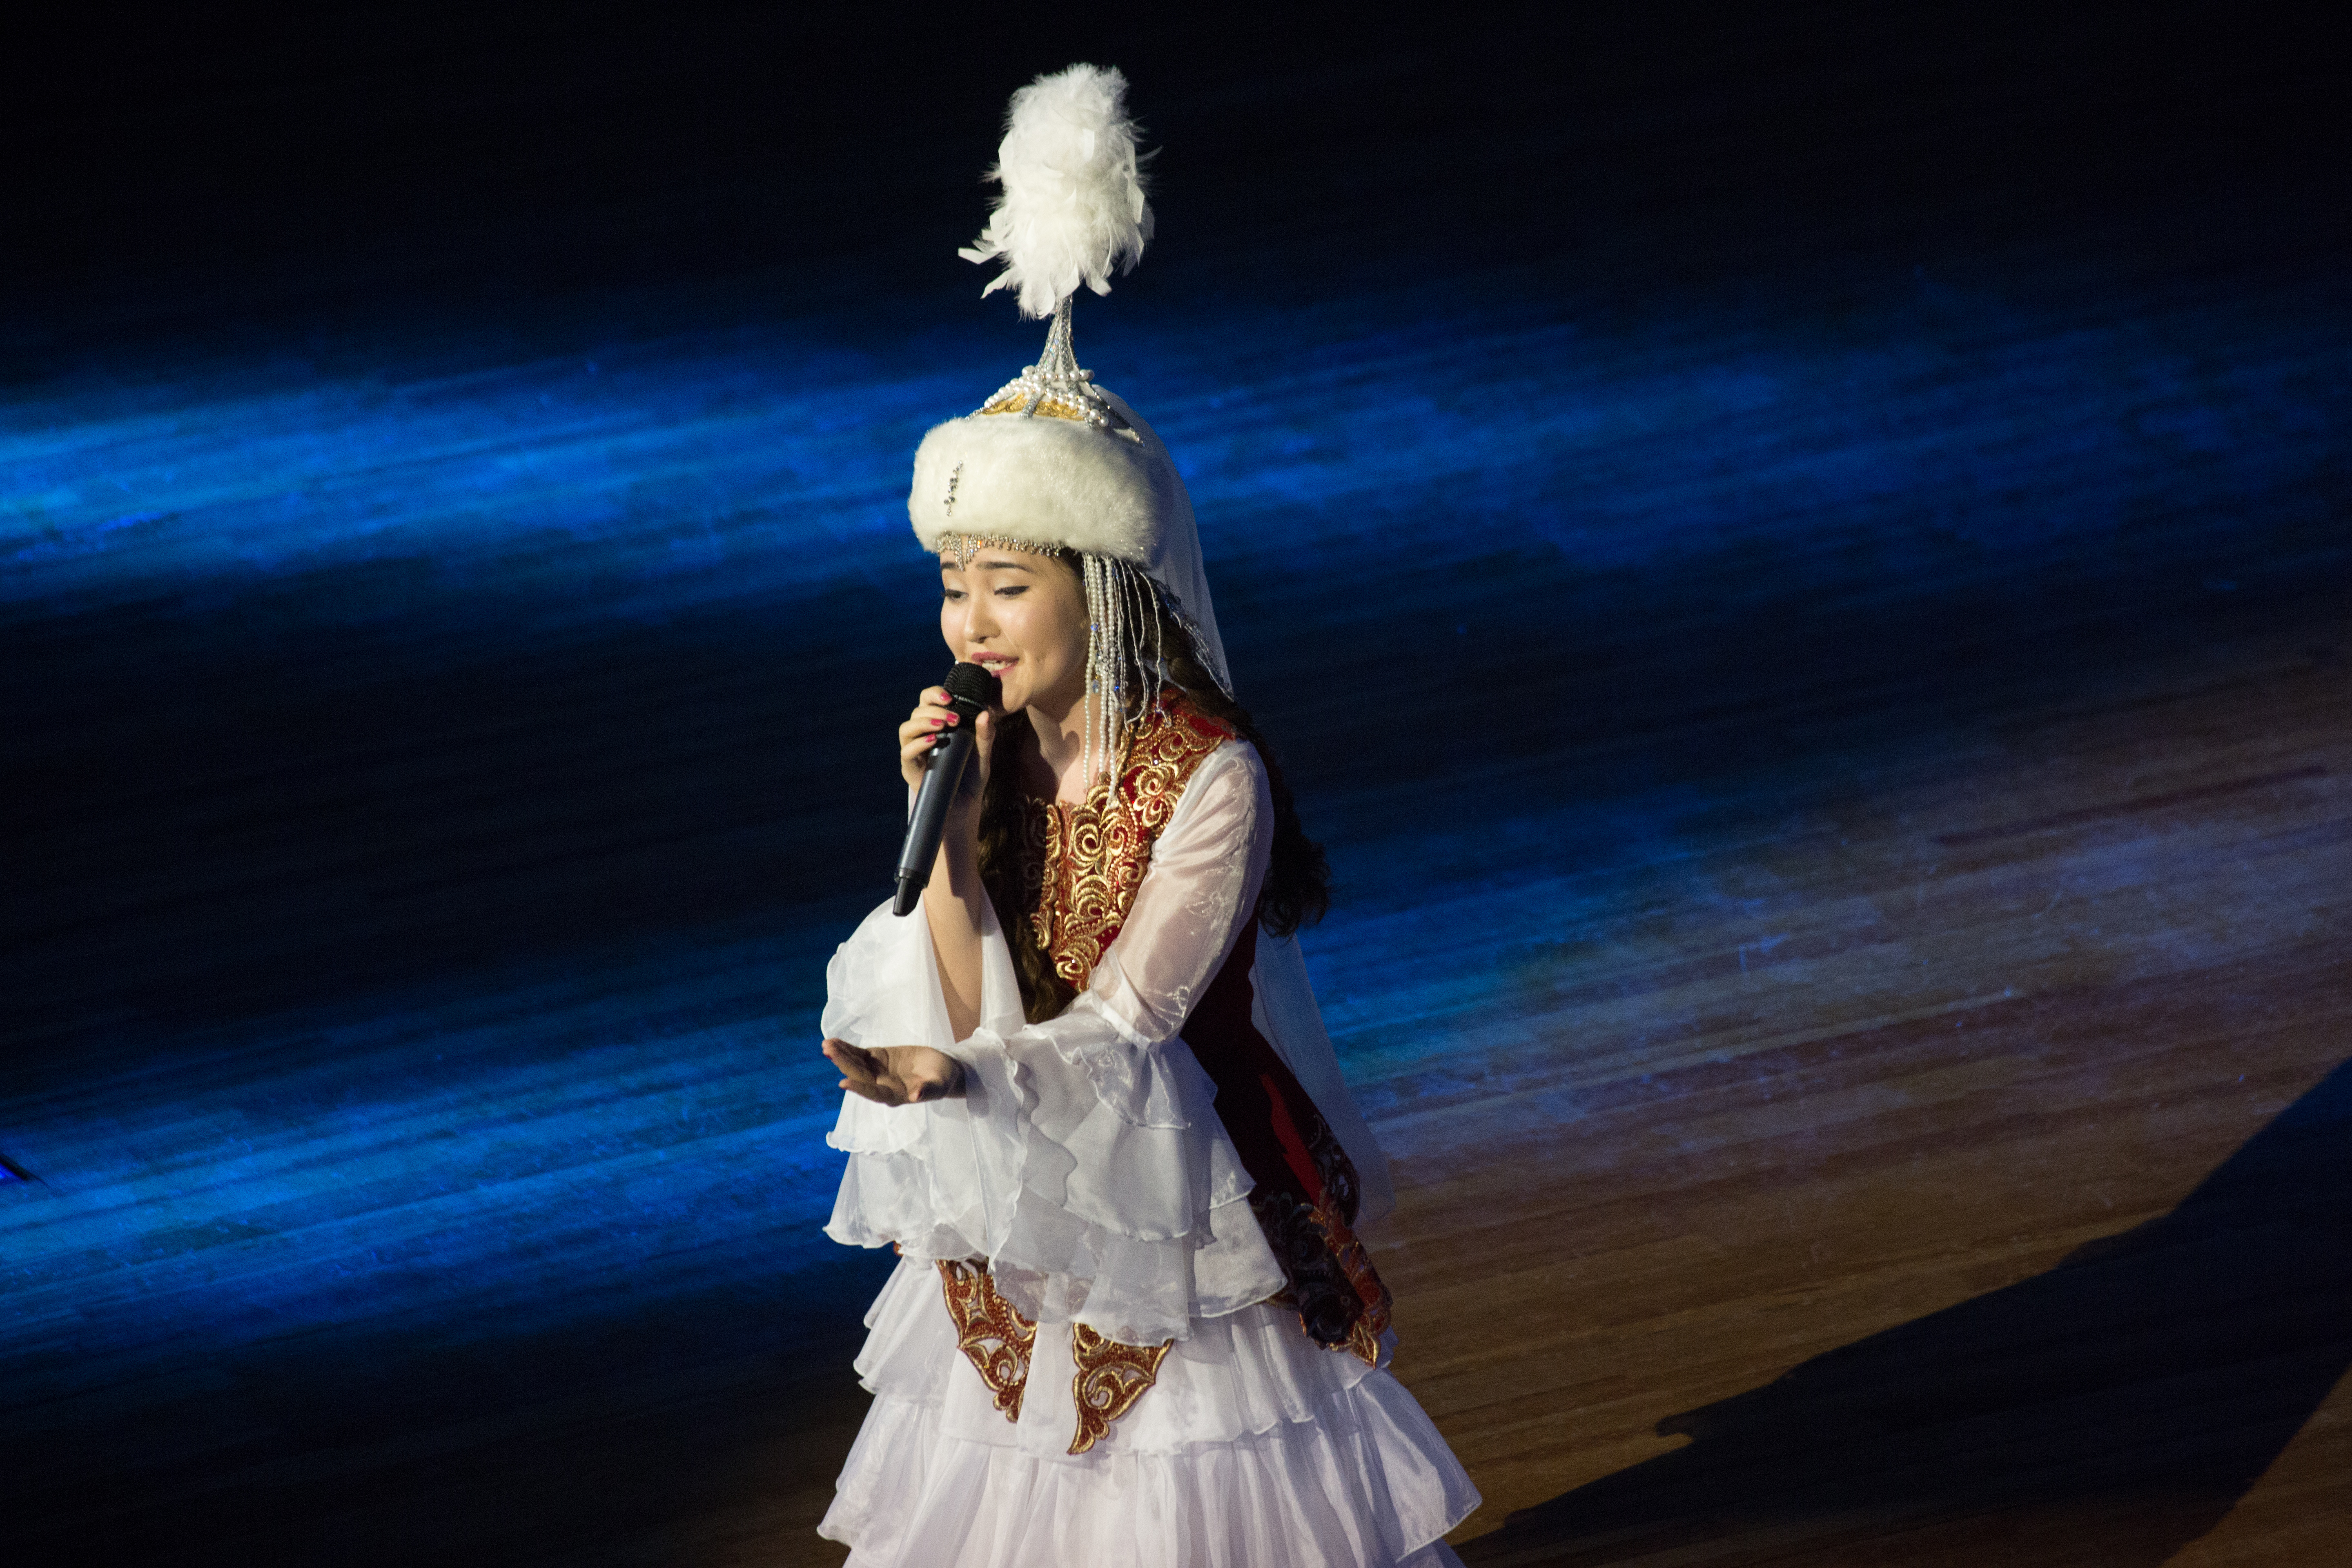 Казахская музыка веселая. Казашка танцует. Алтын на голове. Казахские песни популярные исполняет женщина. Кумыкская песня Алтын Кызыл чачларынг.